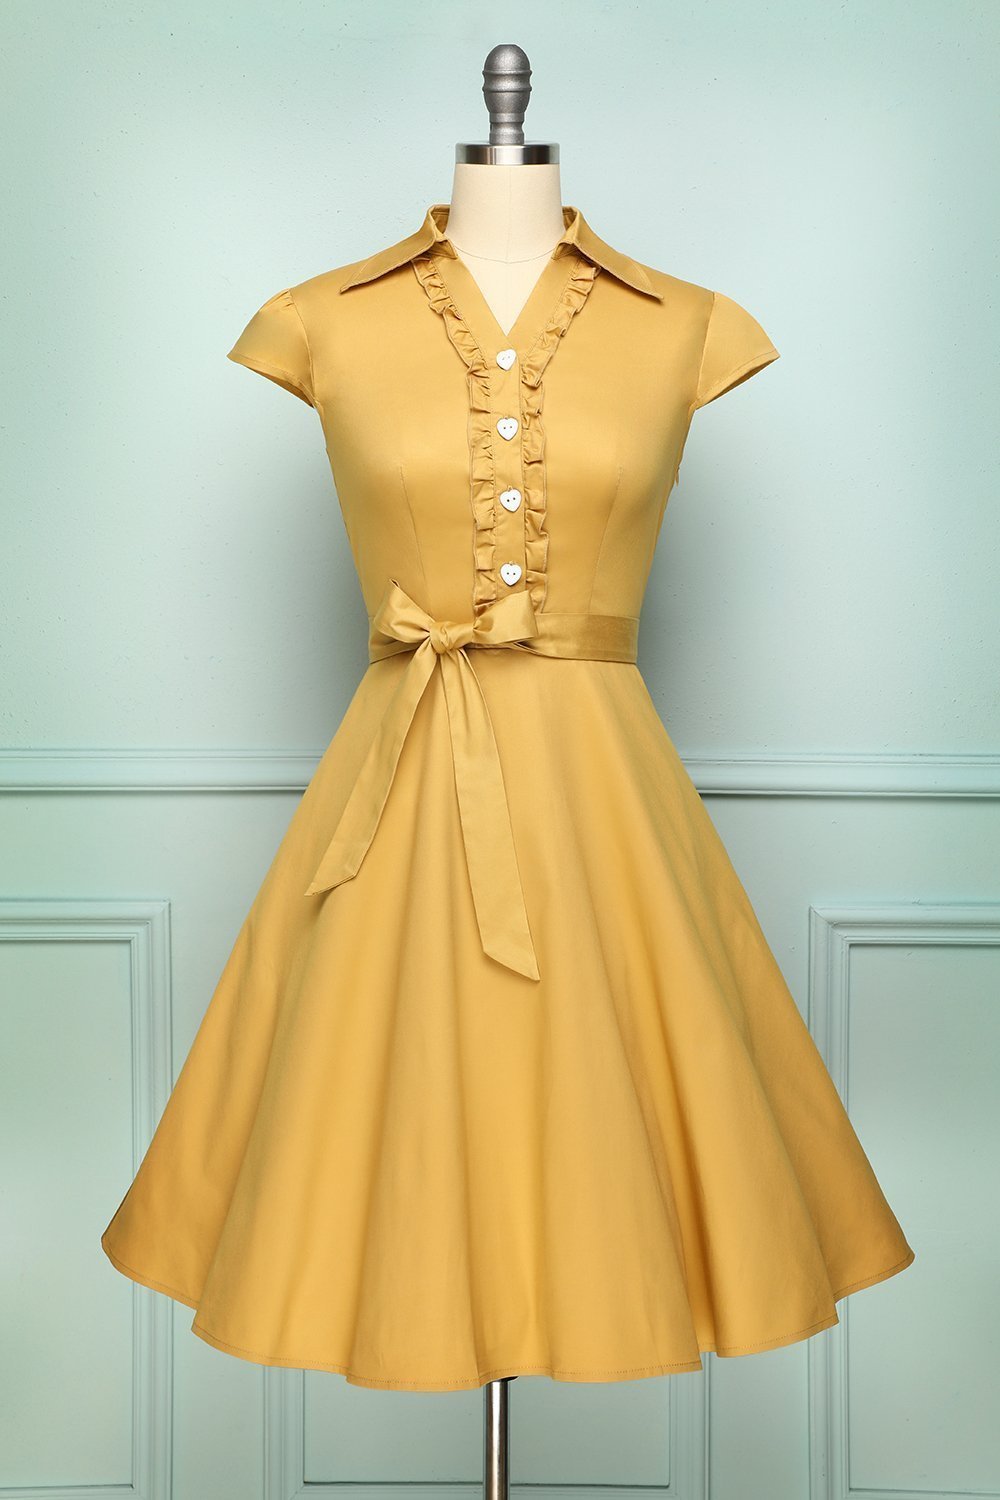 Vestido de década de 1950 amarelo